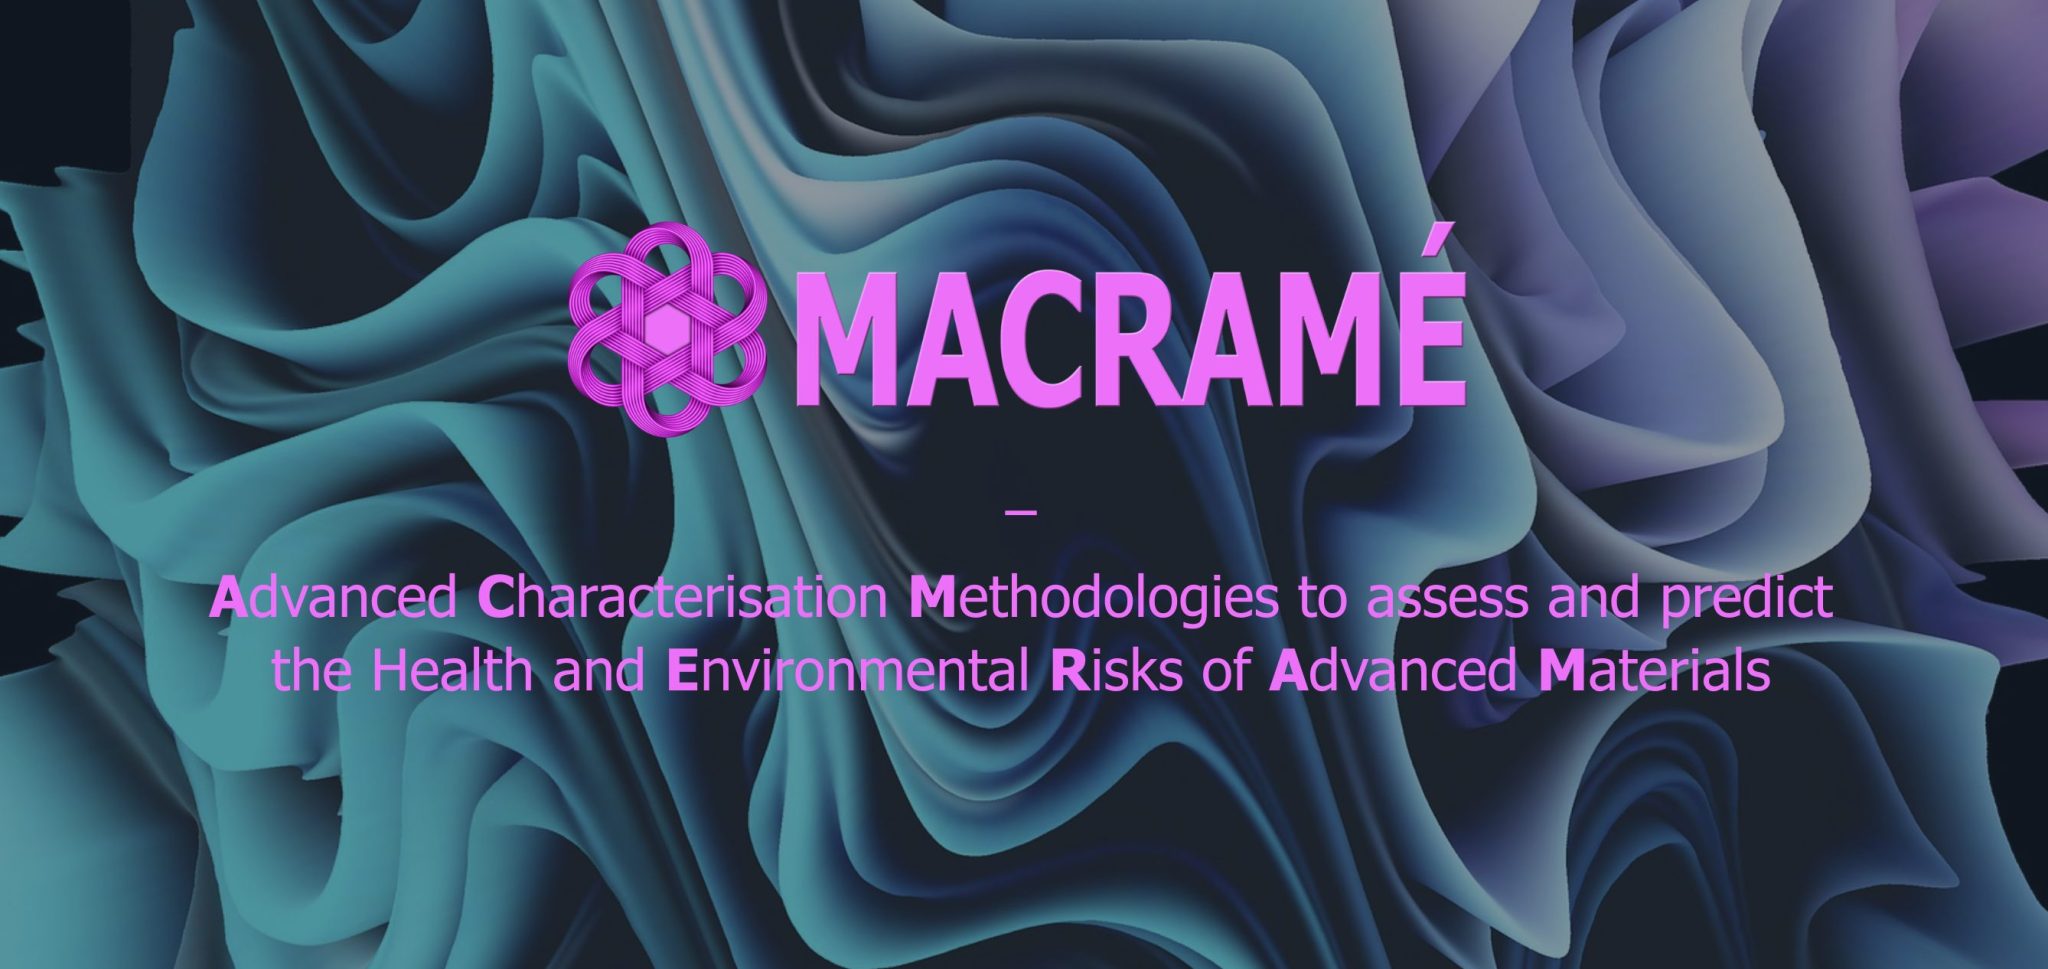 MACRAMÉ Events on Risk Assessment of Advanced Materials (Webinar & Workshop)